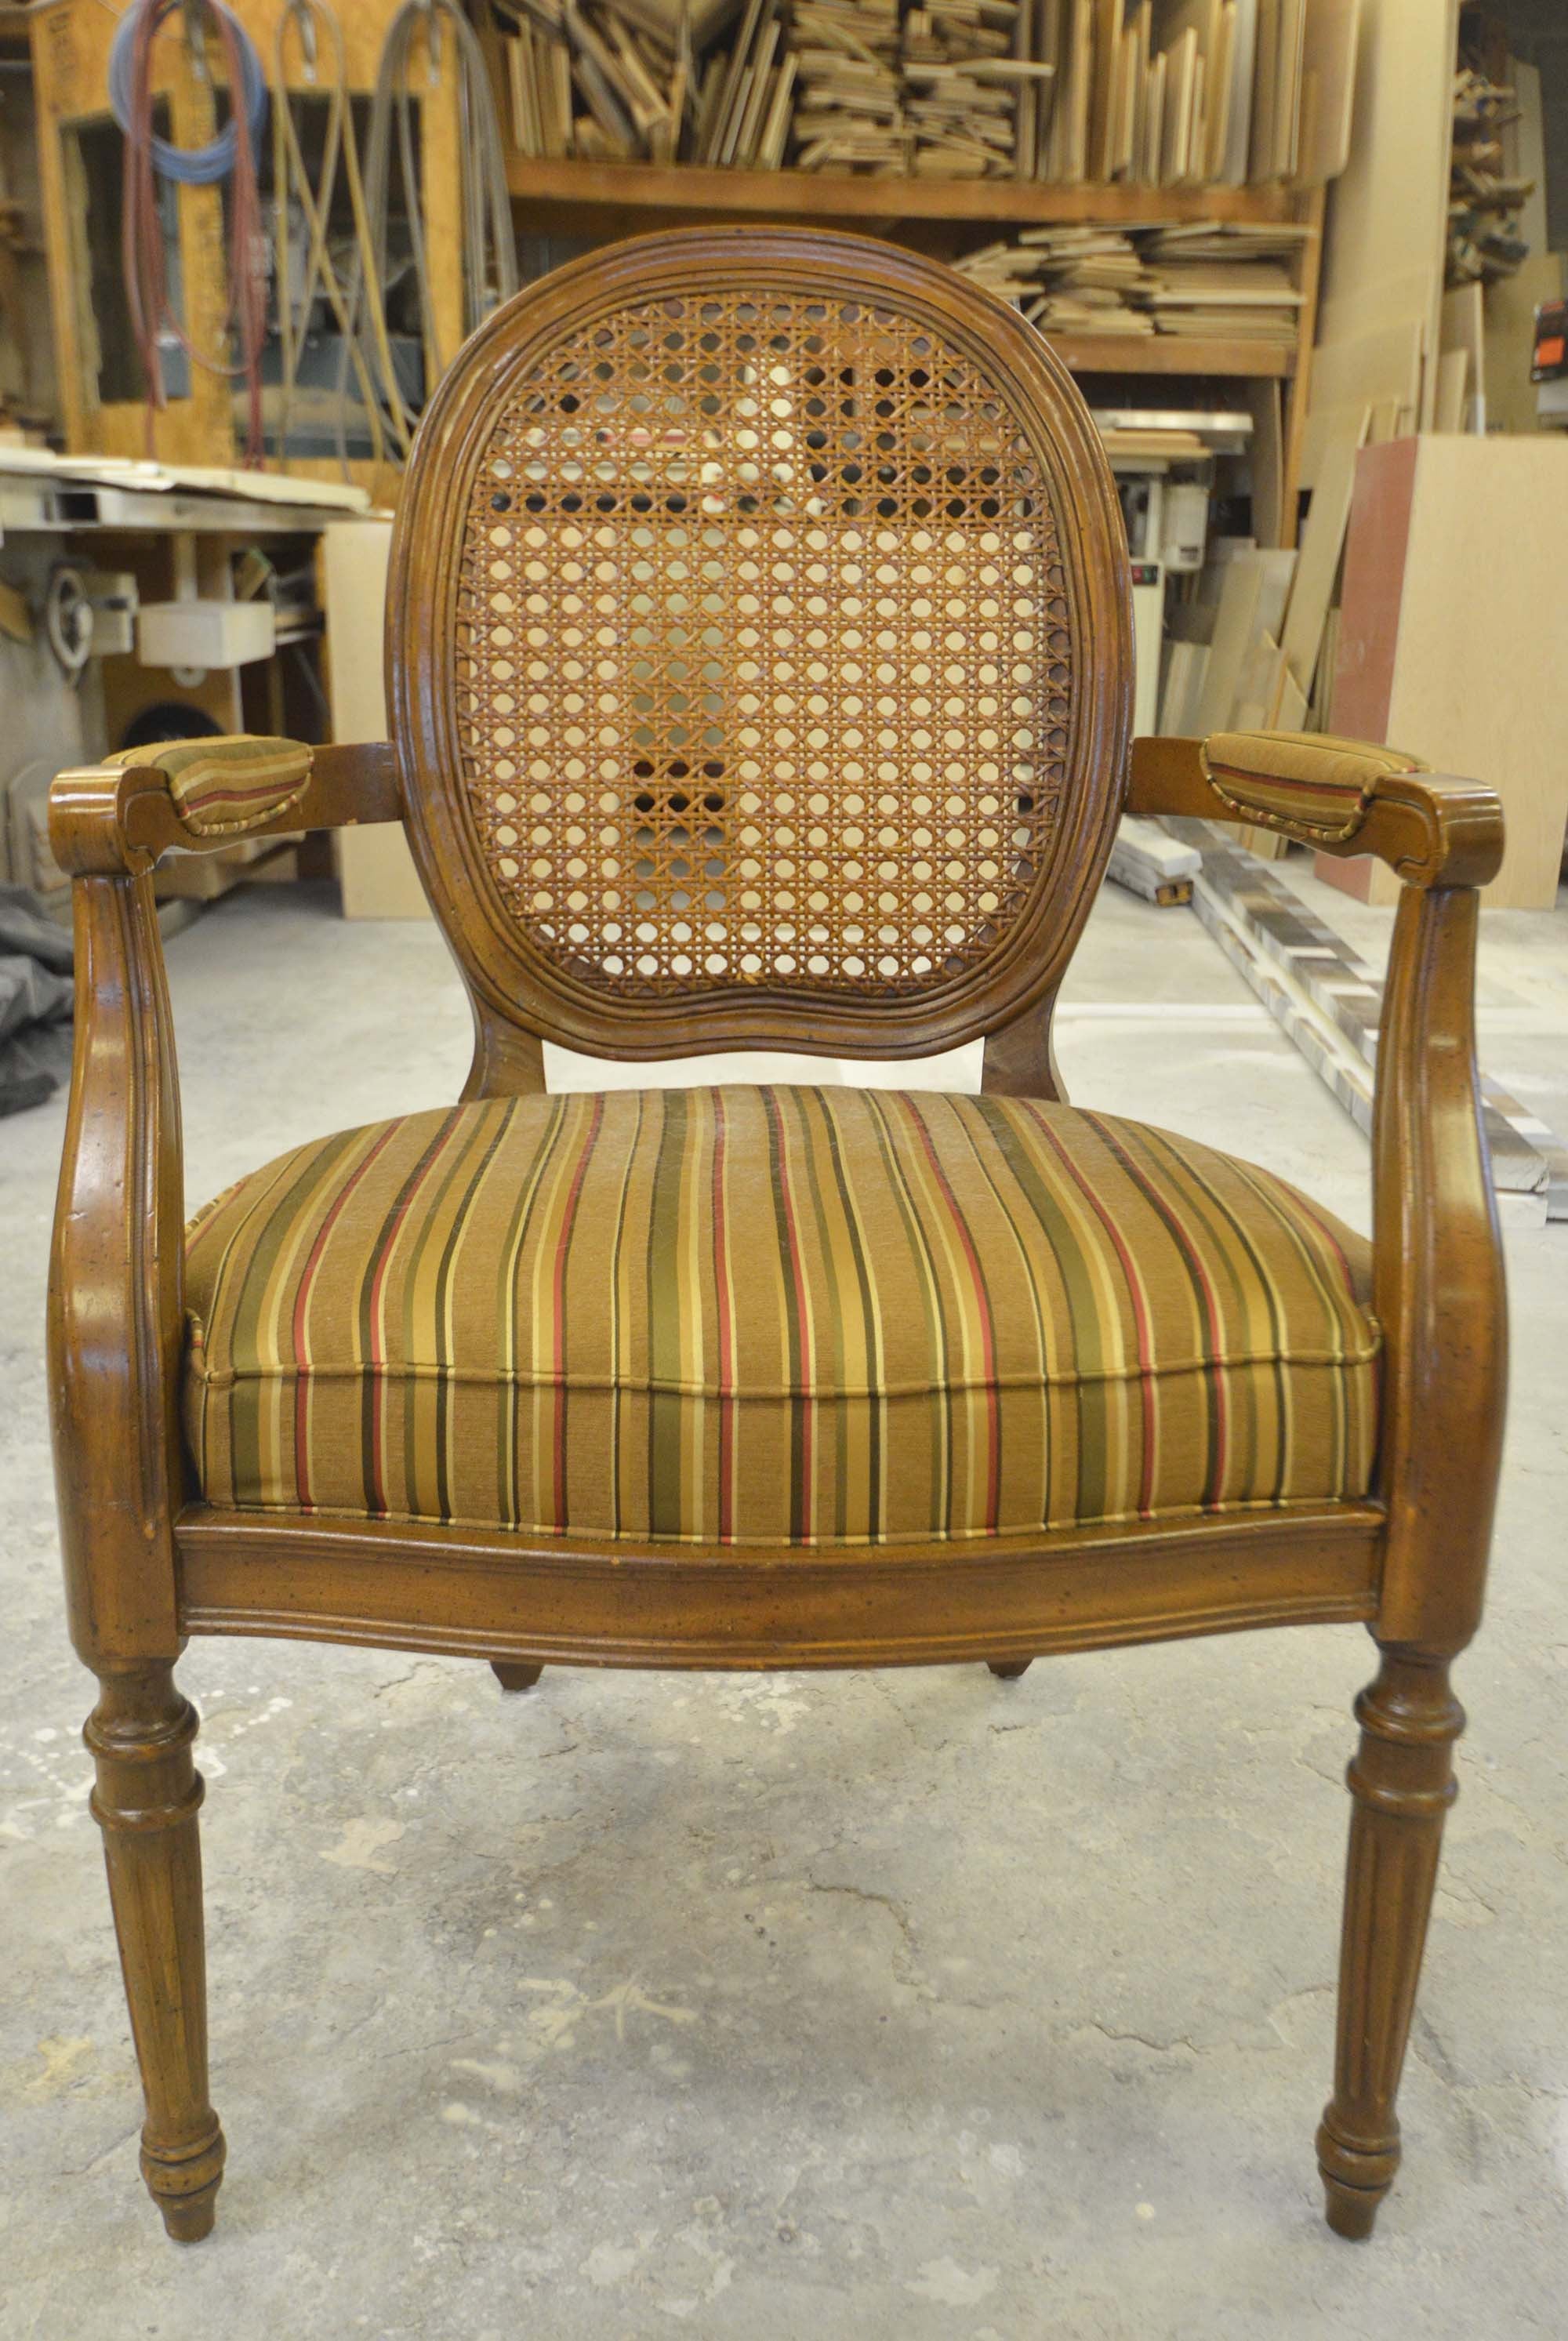 Modern Glam Cane Chair Redo